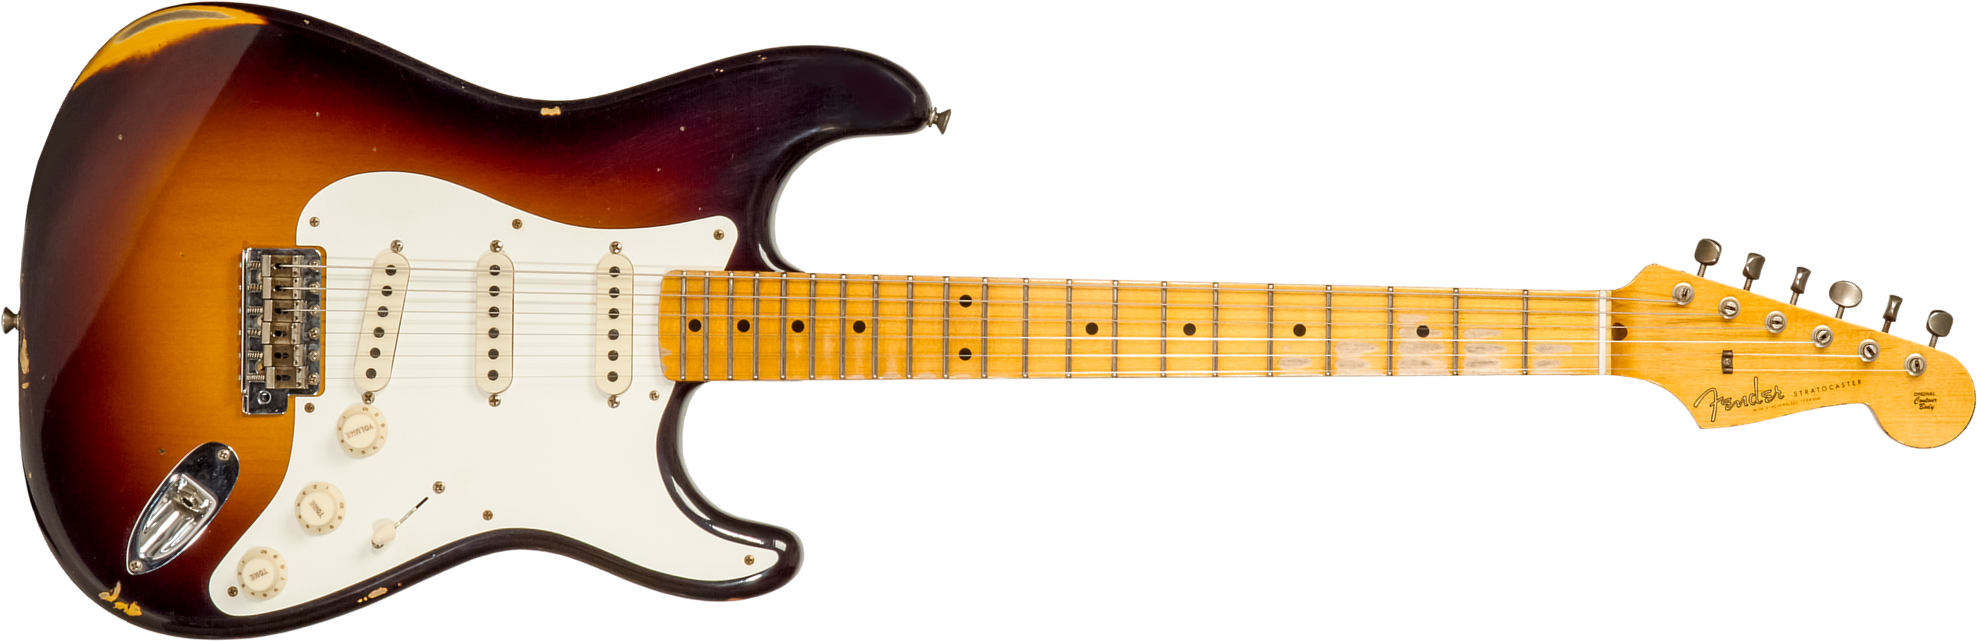 Fender Custom Shop Strat 1957 3s Trem Mn #cz571791 - Relic Wide Fade 2-color Sunburst - Guitarra eléctrica con forma de str. - Main picture